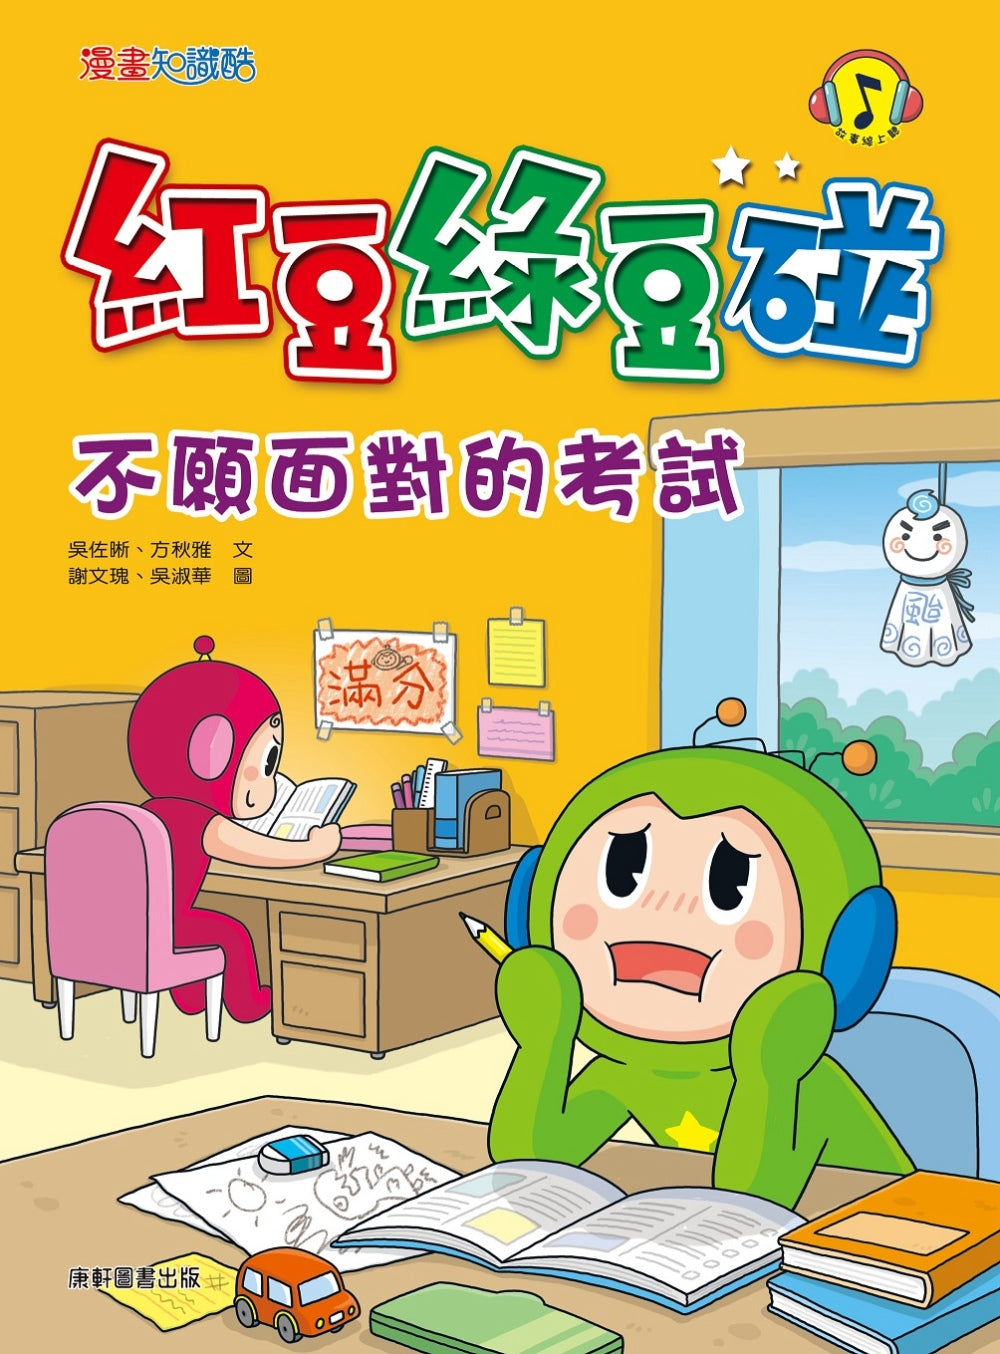 Red Bean Green Bean Manga #10: Don't Wanna Deal with Exams • 紅豆綠豆碰 #10：不願面對的考試